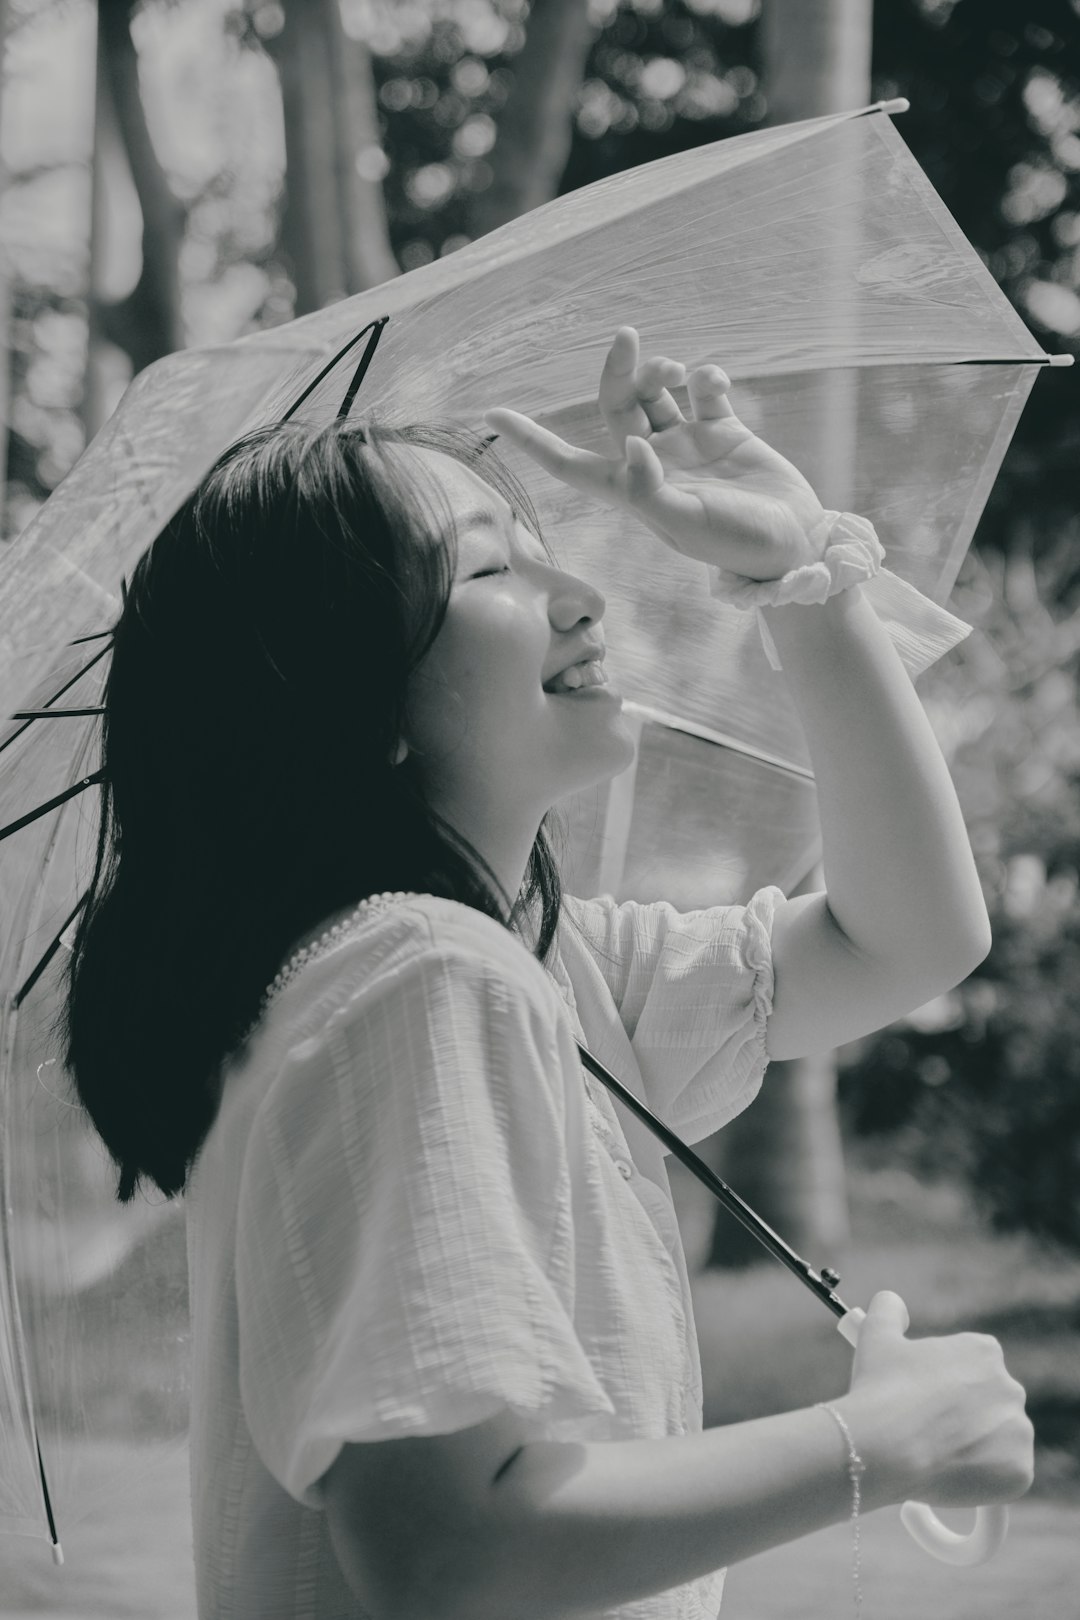 woman in white shirt holding umbrella